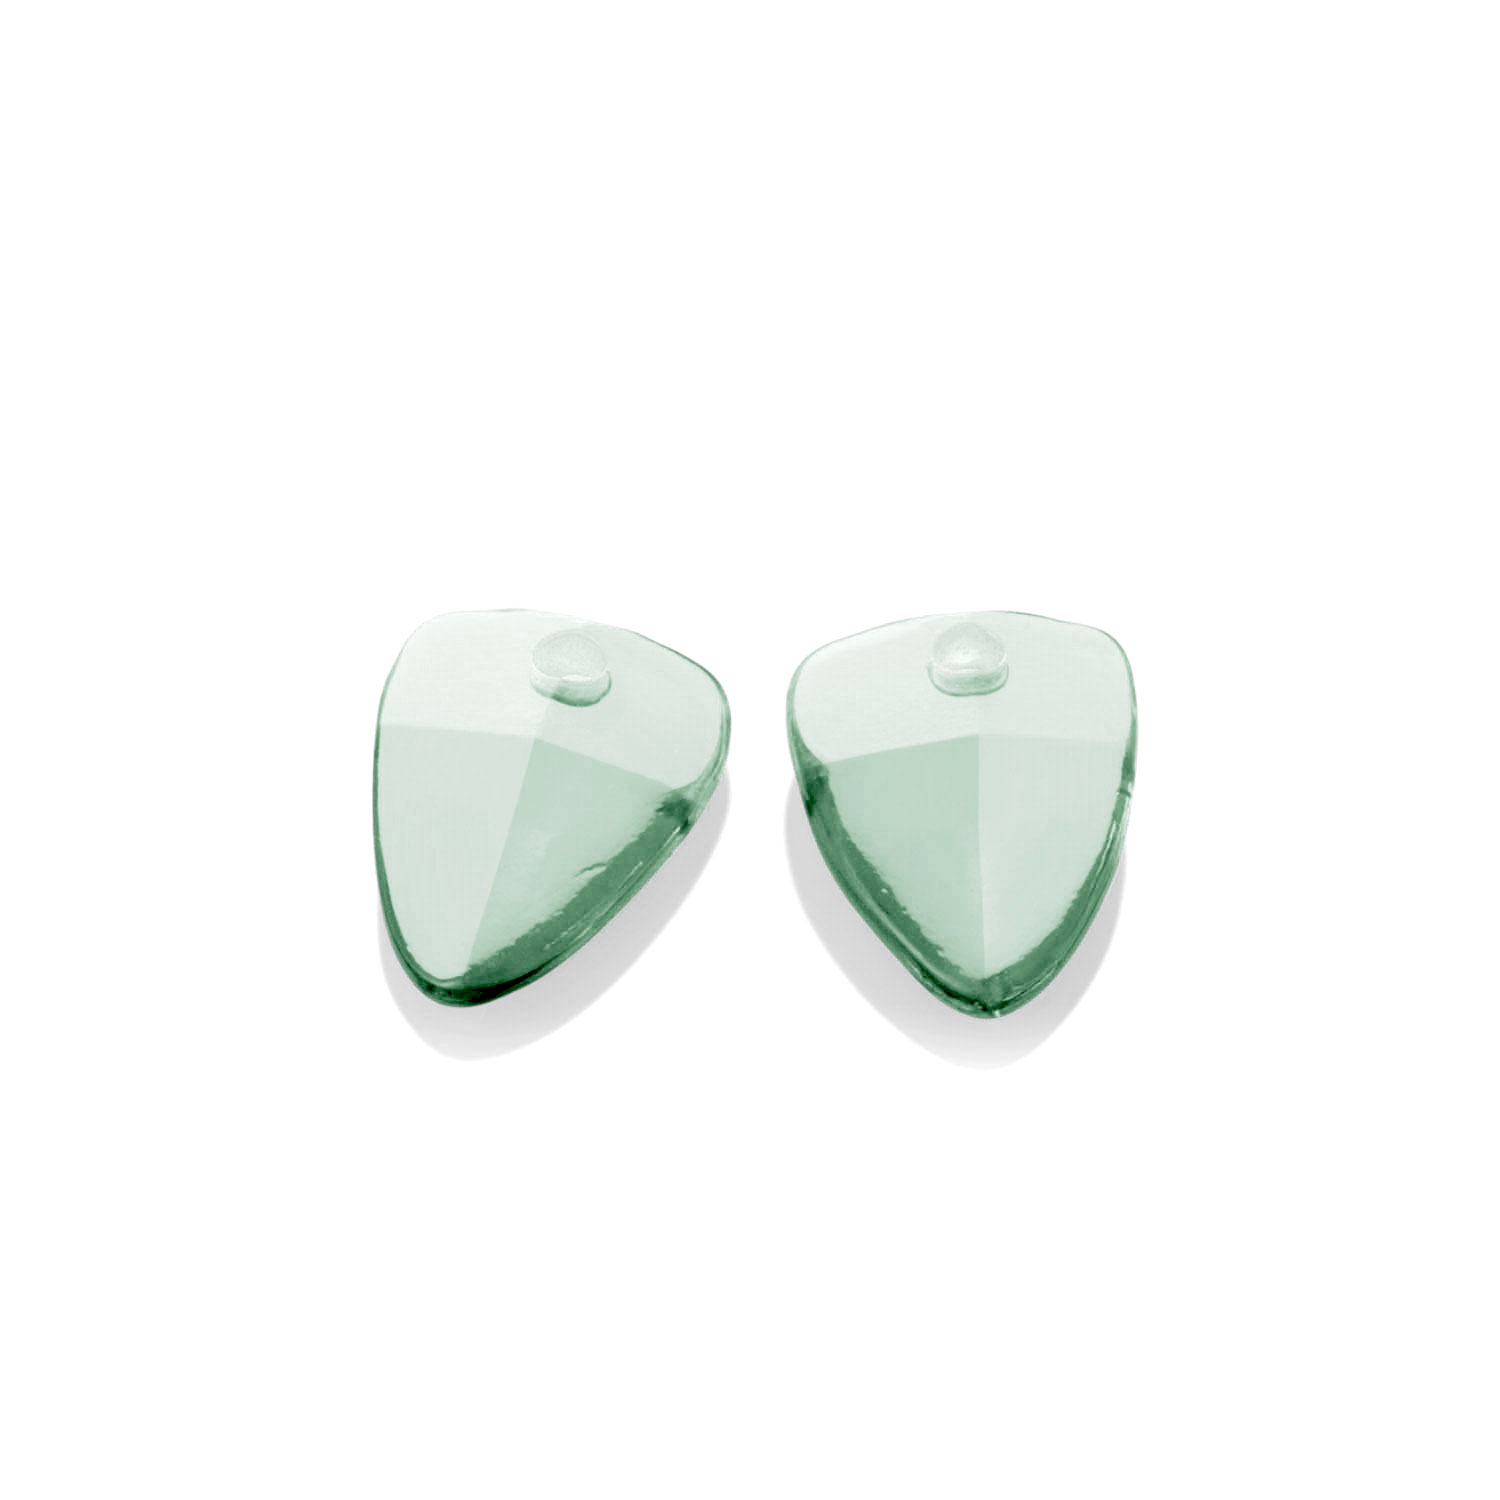 sparkling jewels earring editions Green Amethyst Edge Mini eardrops eagem44-em